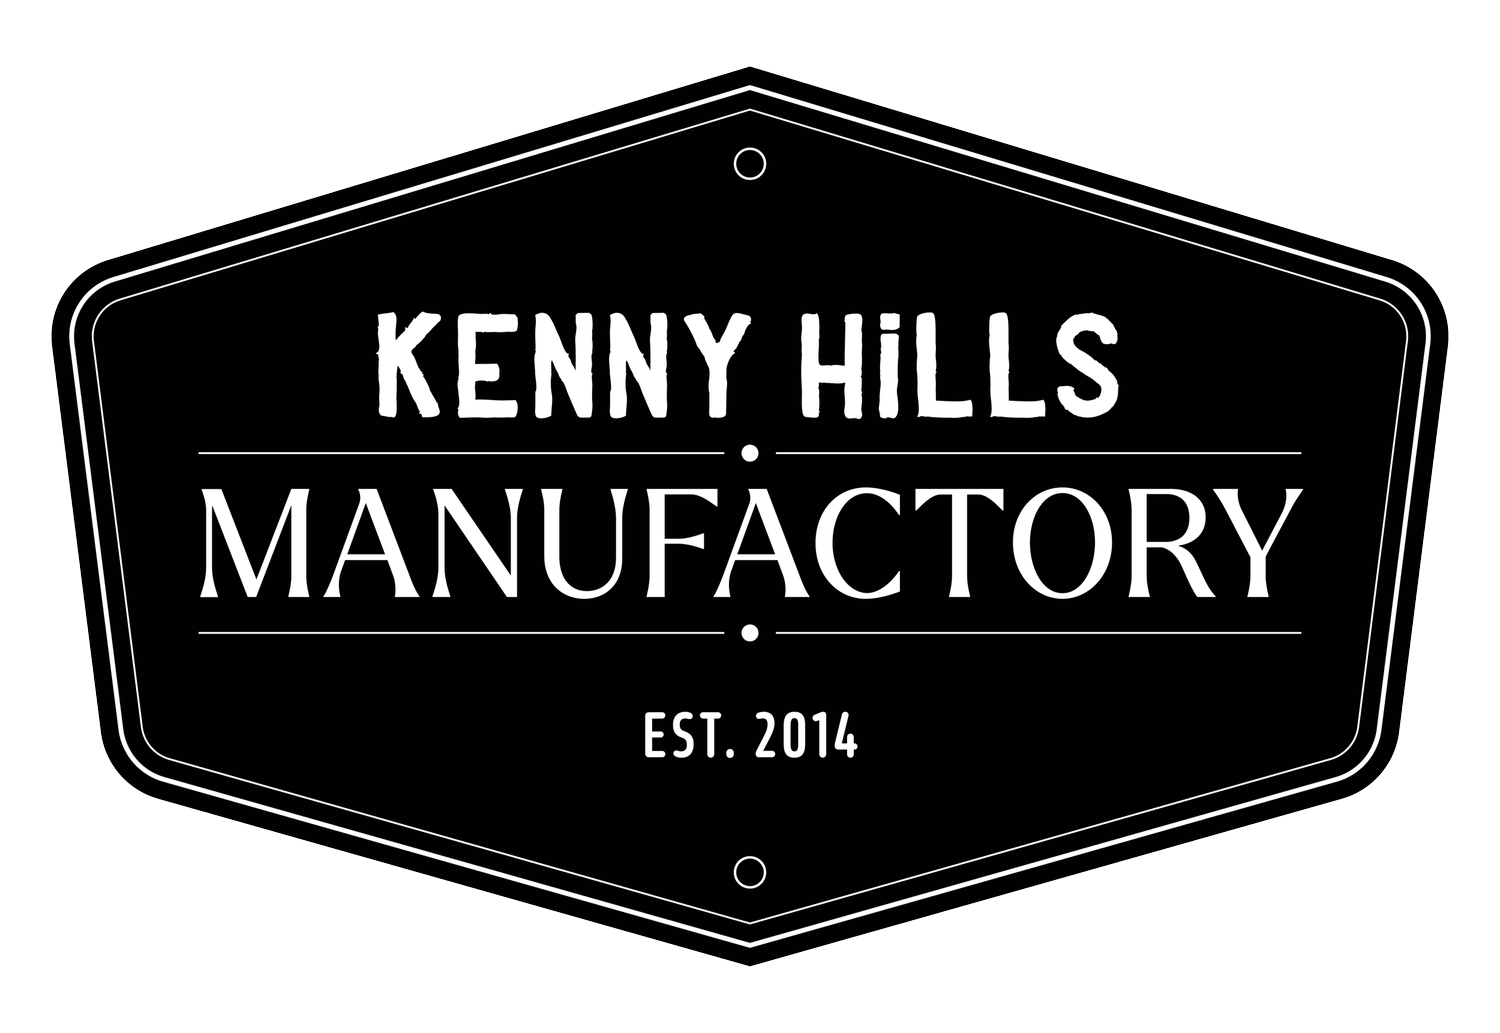 Kenny Hills Manufactory